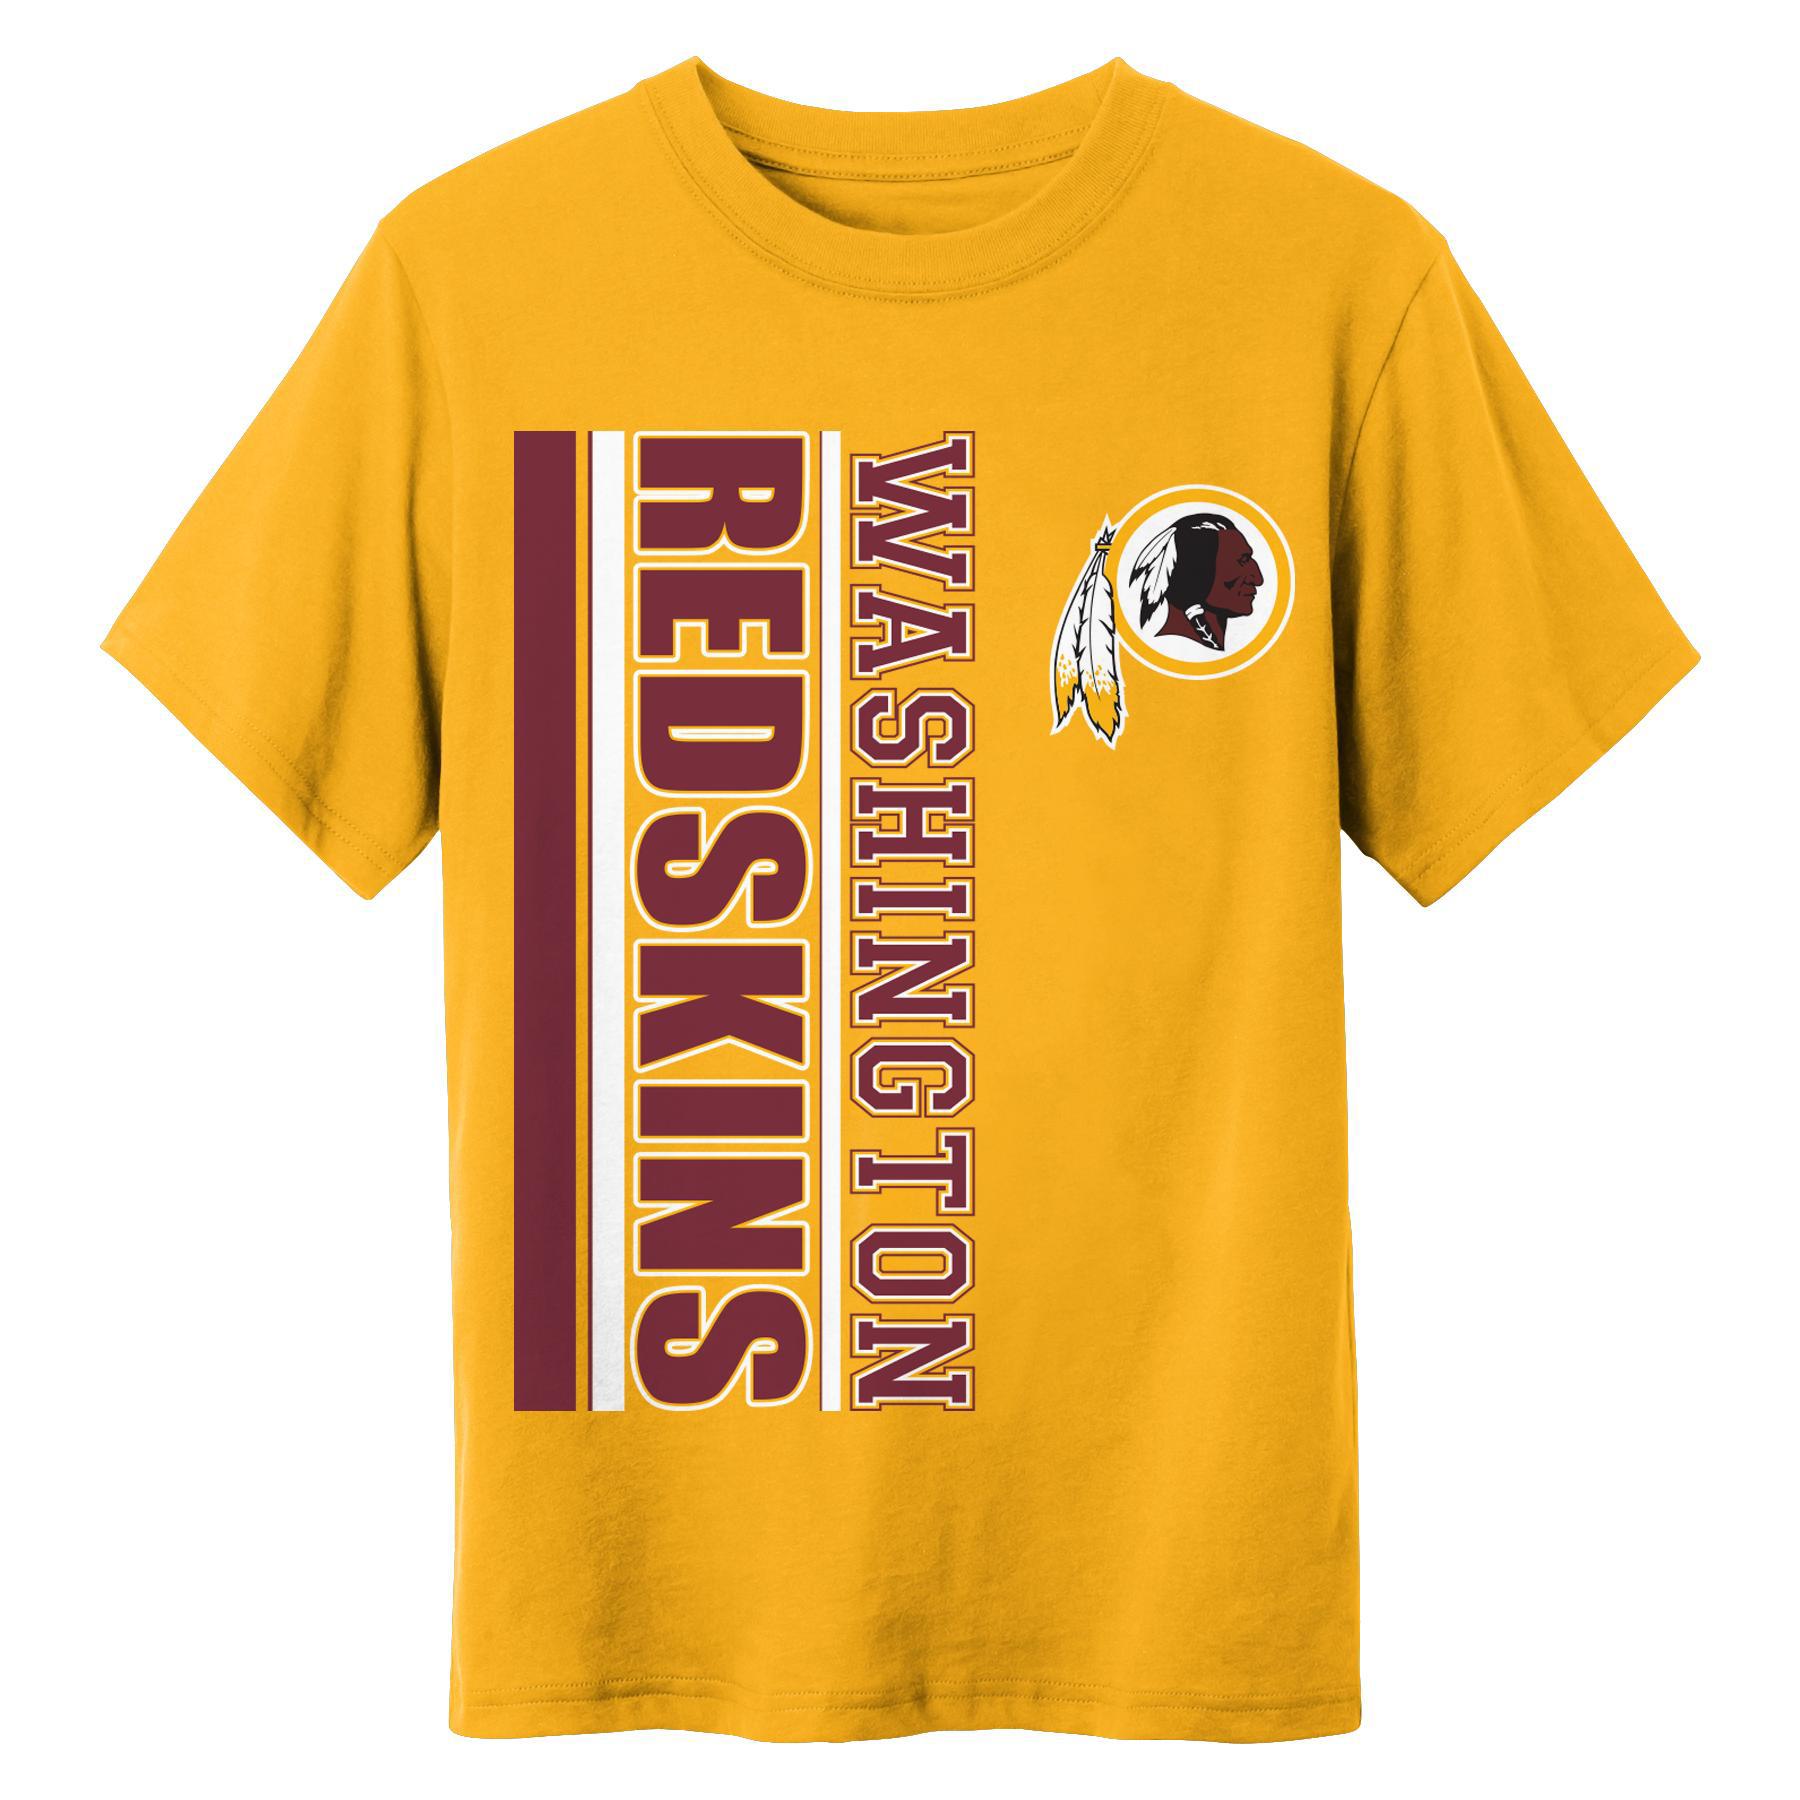 NFL Boys' T-Shirt - Washington Redskins